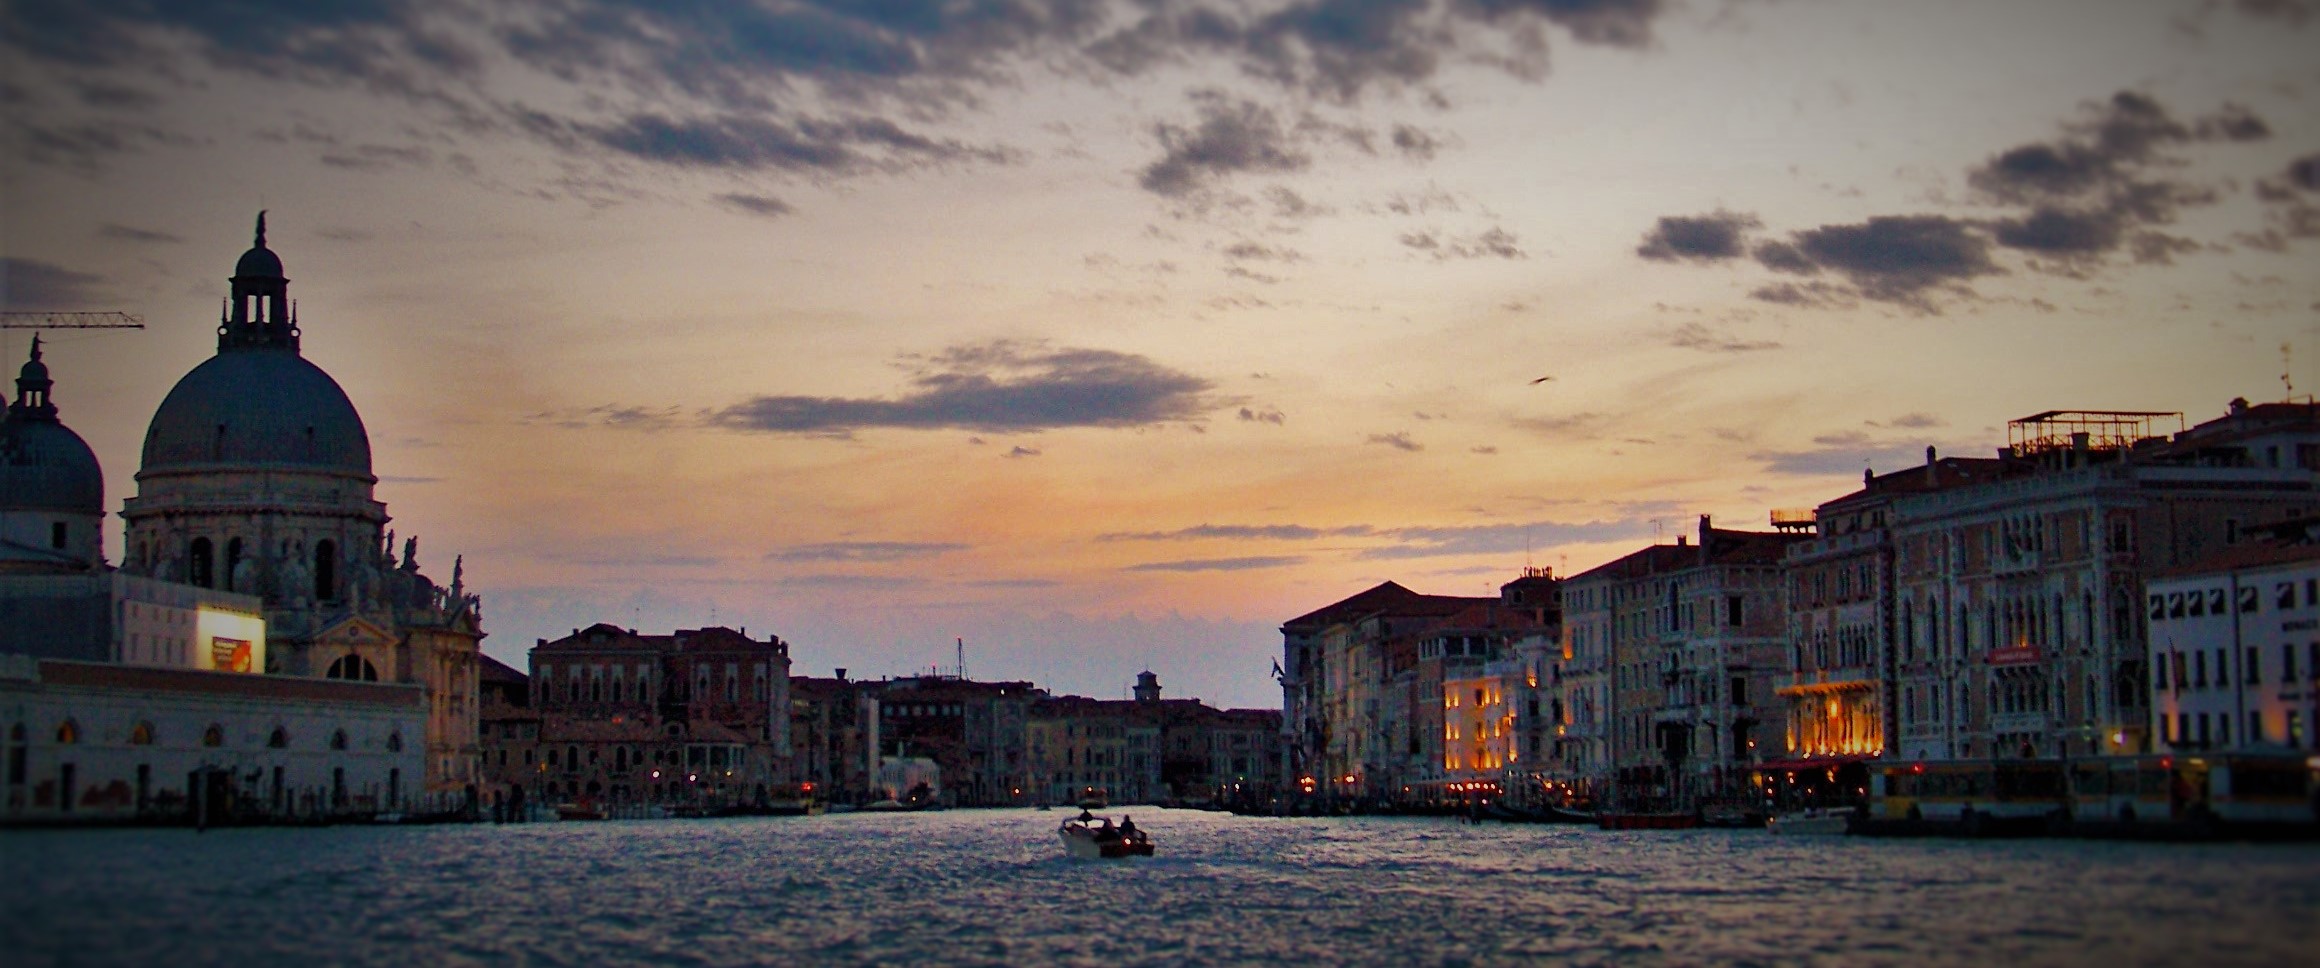 Venice-Grand-Canal-3-header.jpg